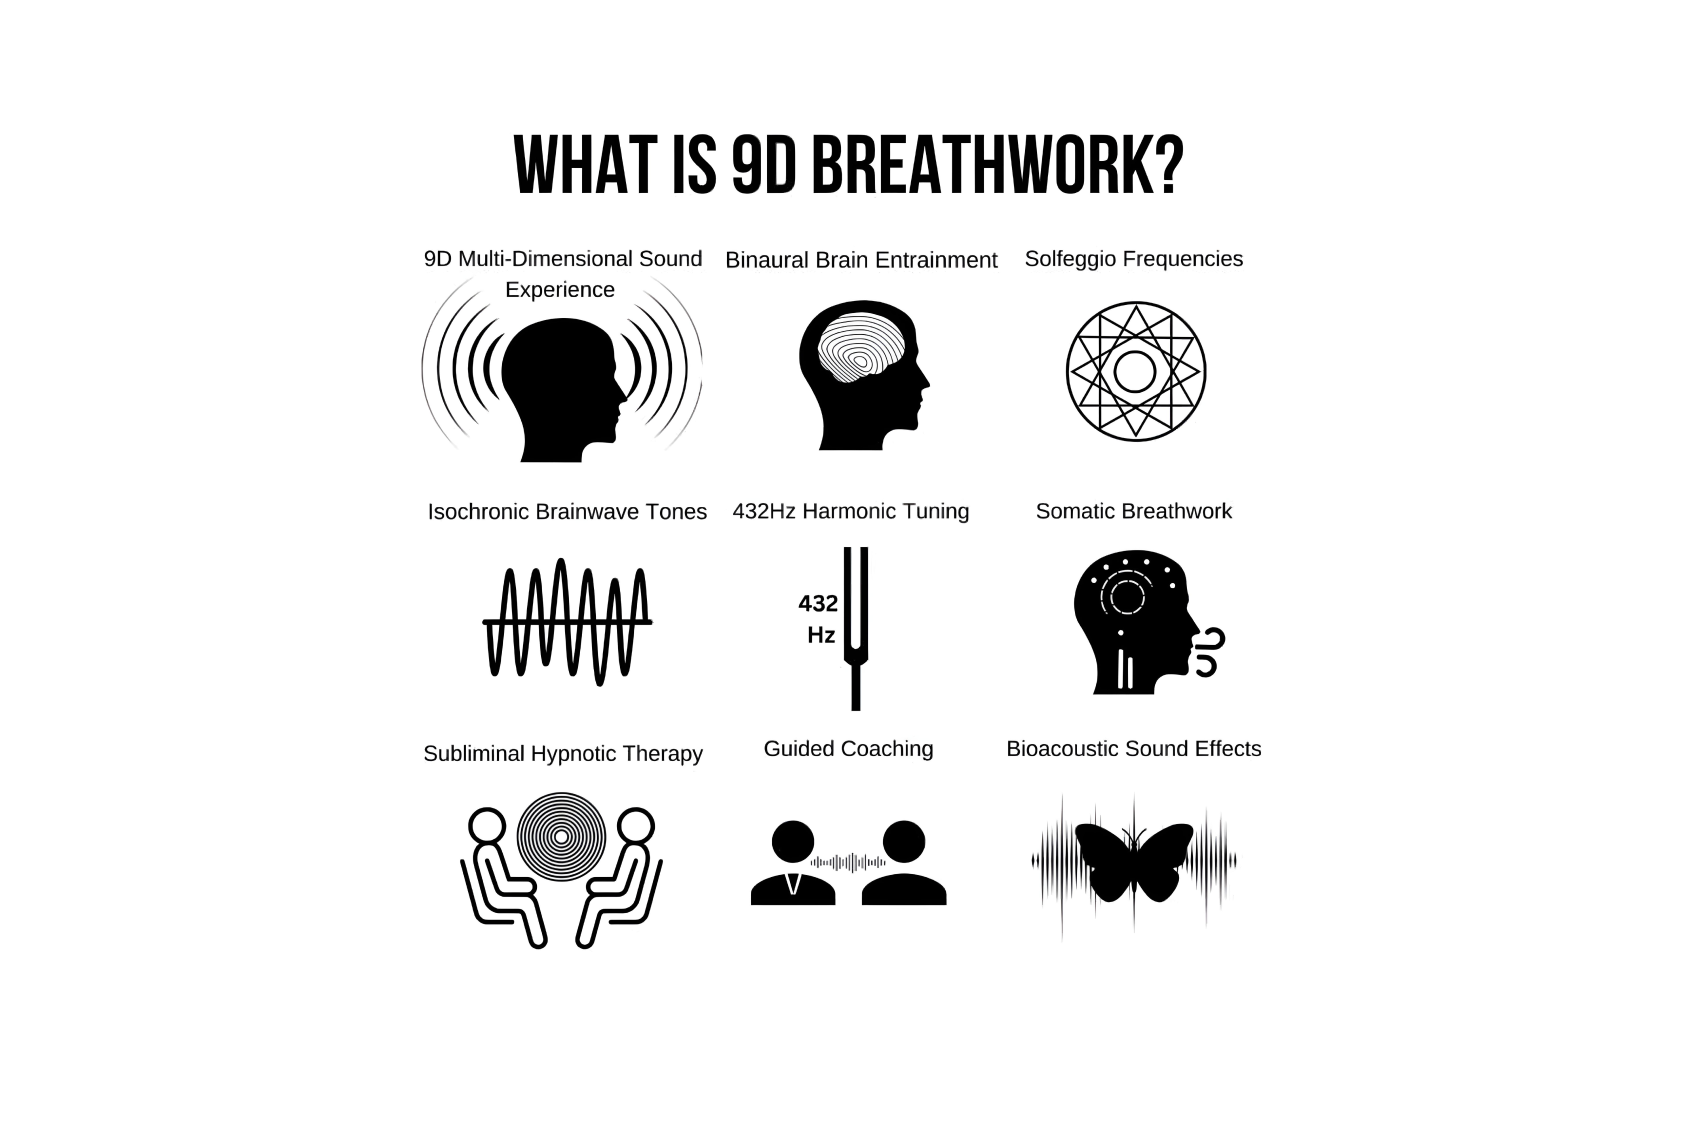 9D Breathwork